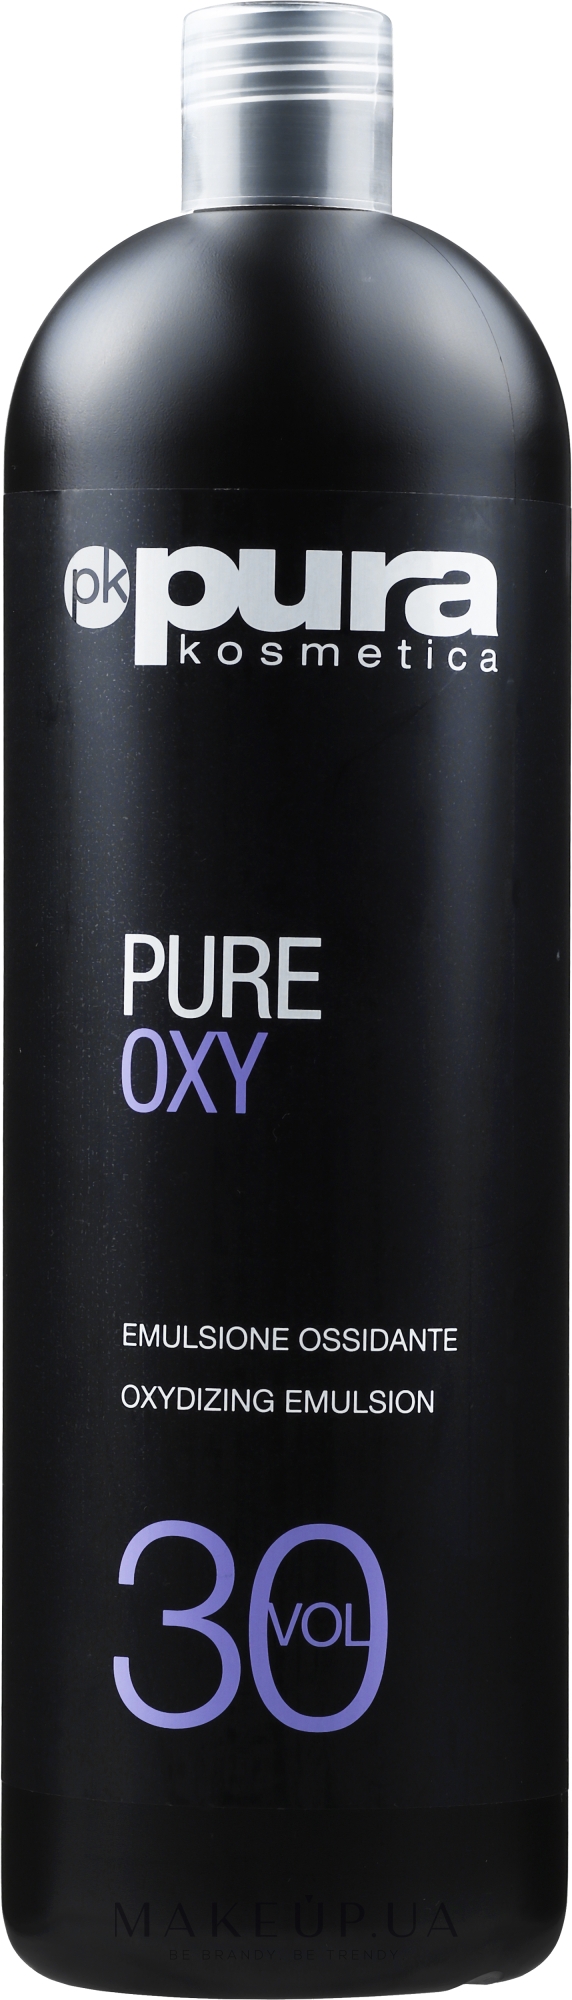 Окислювач для фарби 9% - Pura Kosmetica Pure Oxy 30 Vol — фото 1000ml